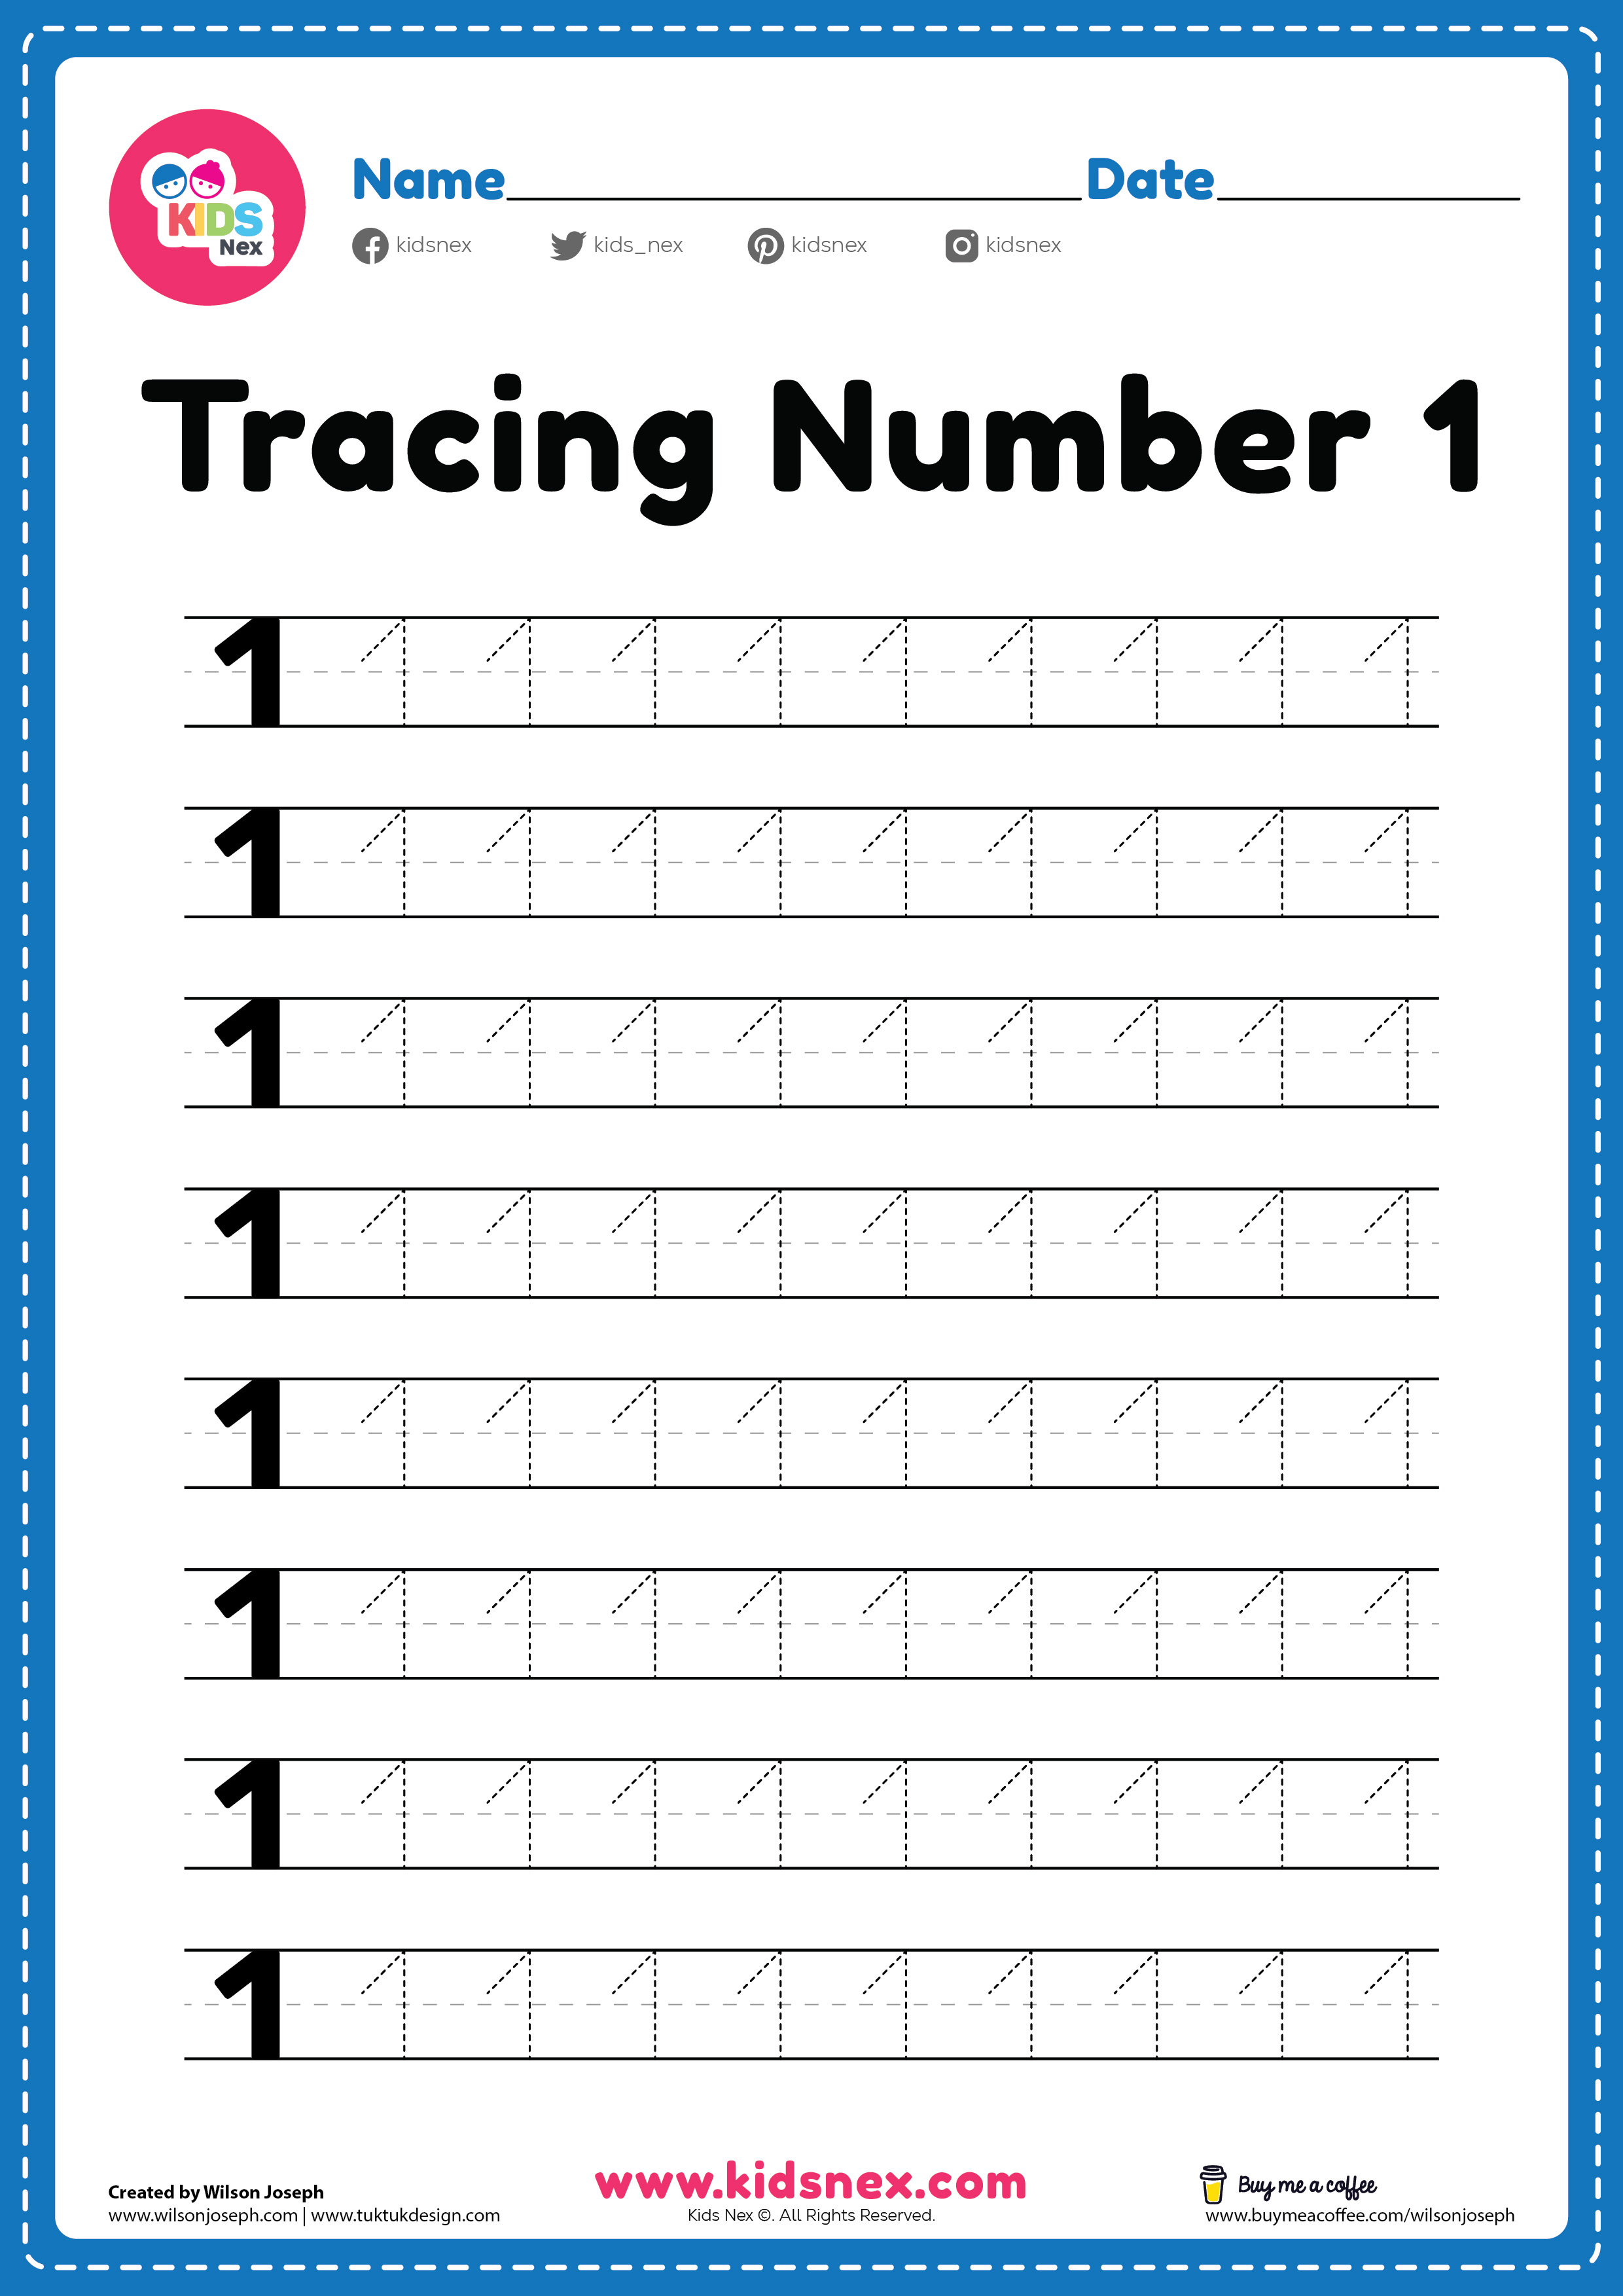 worksheet-for-tracing-number-1-free-printable-www-kidsnex